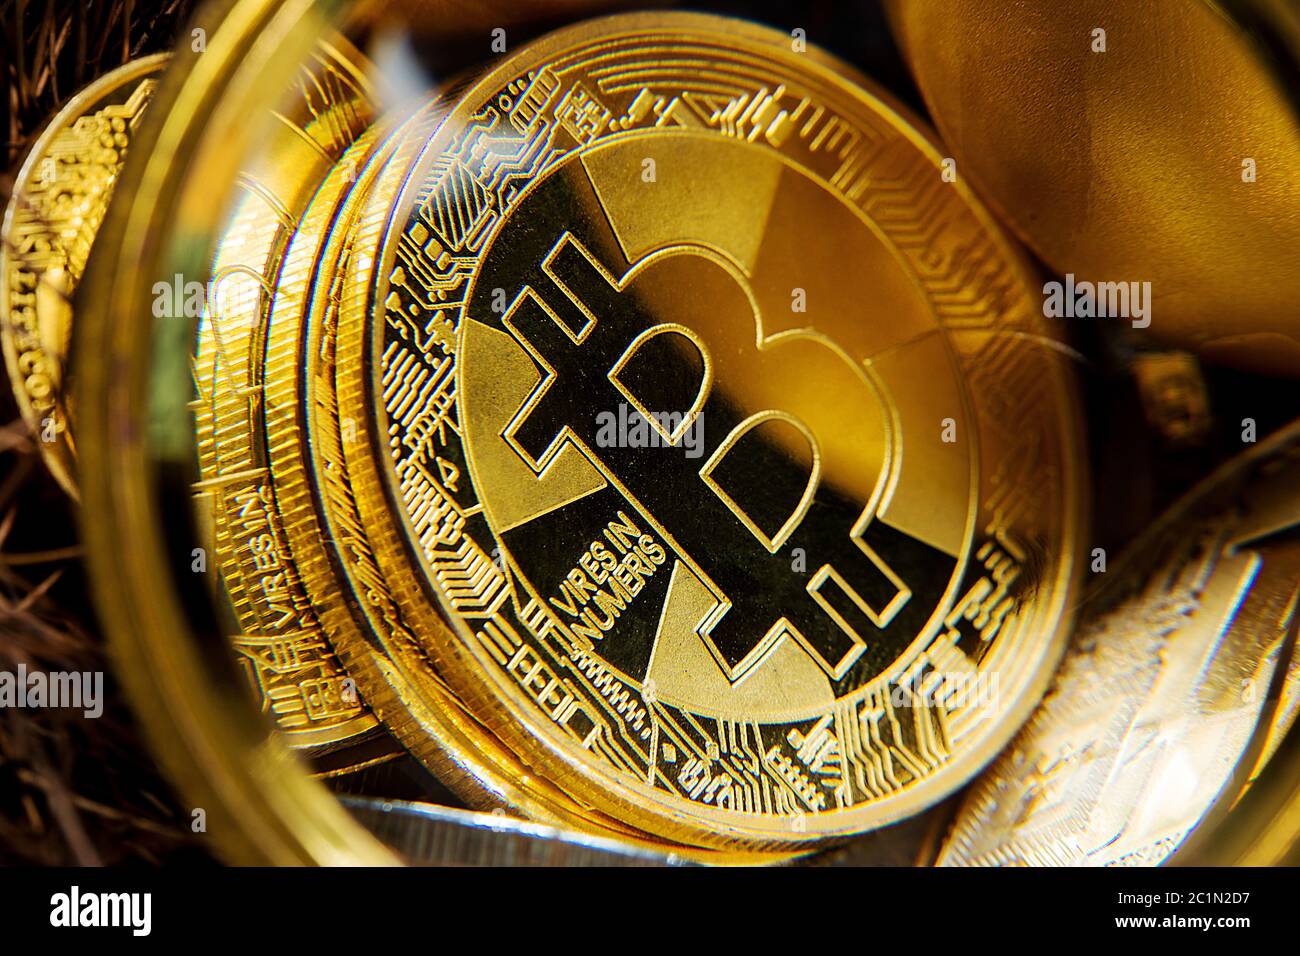 Bitcoin Cryptocurrency digitale Bit Münze BTC Währung Technologie Business Internet Konzept. Stockfoto